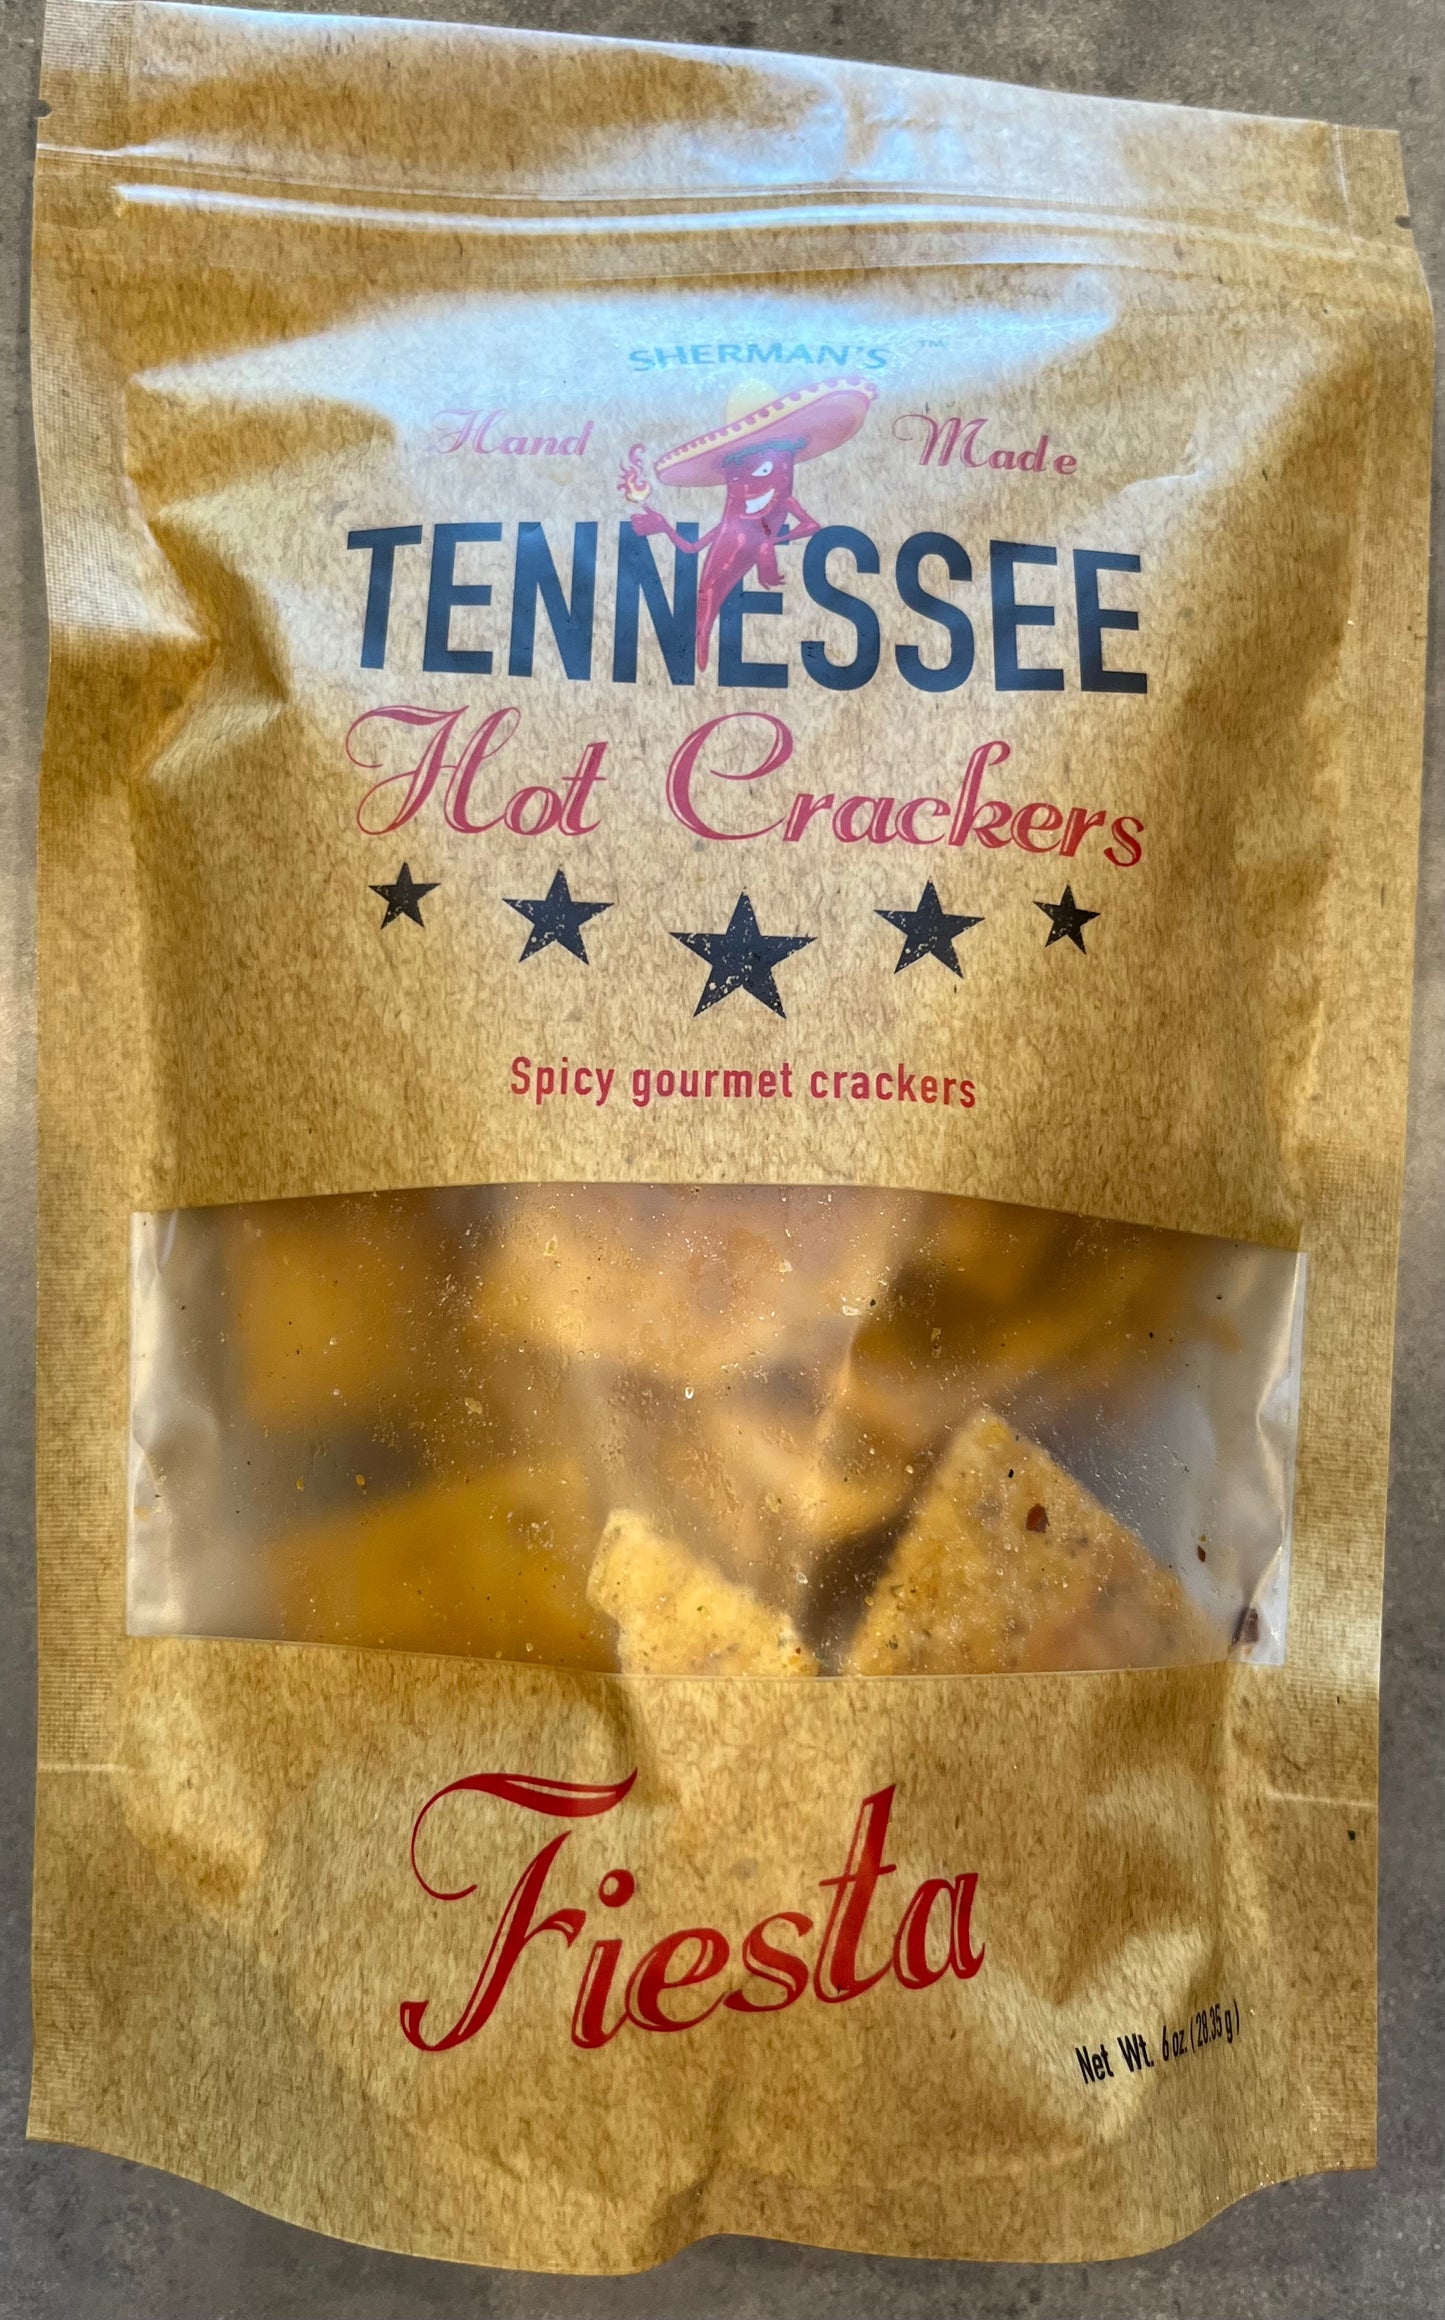 Tennessee Hot Crackers Fiesta